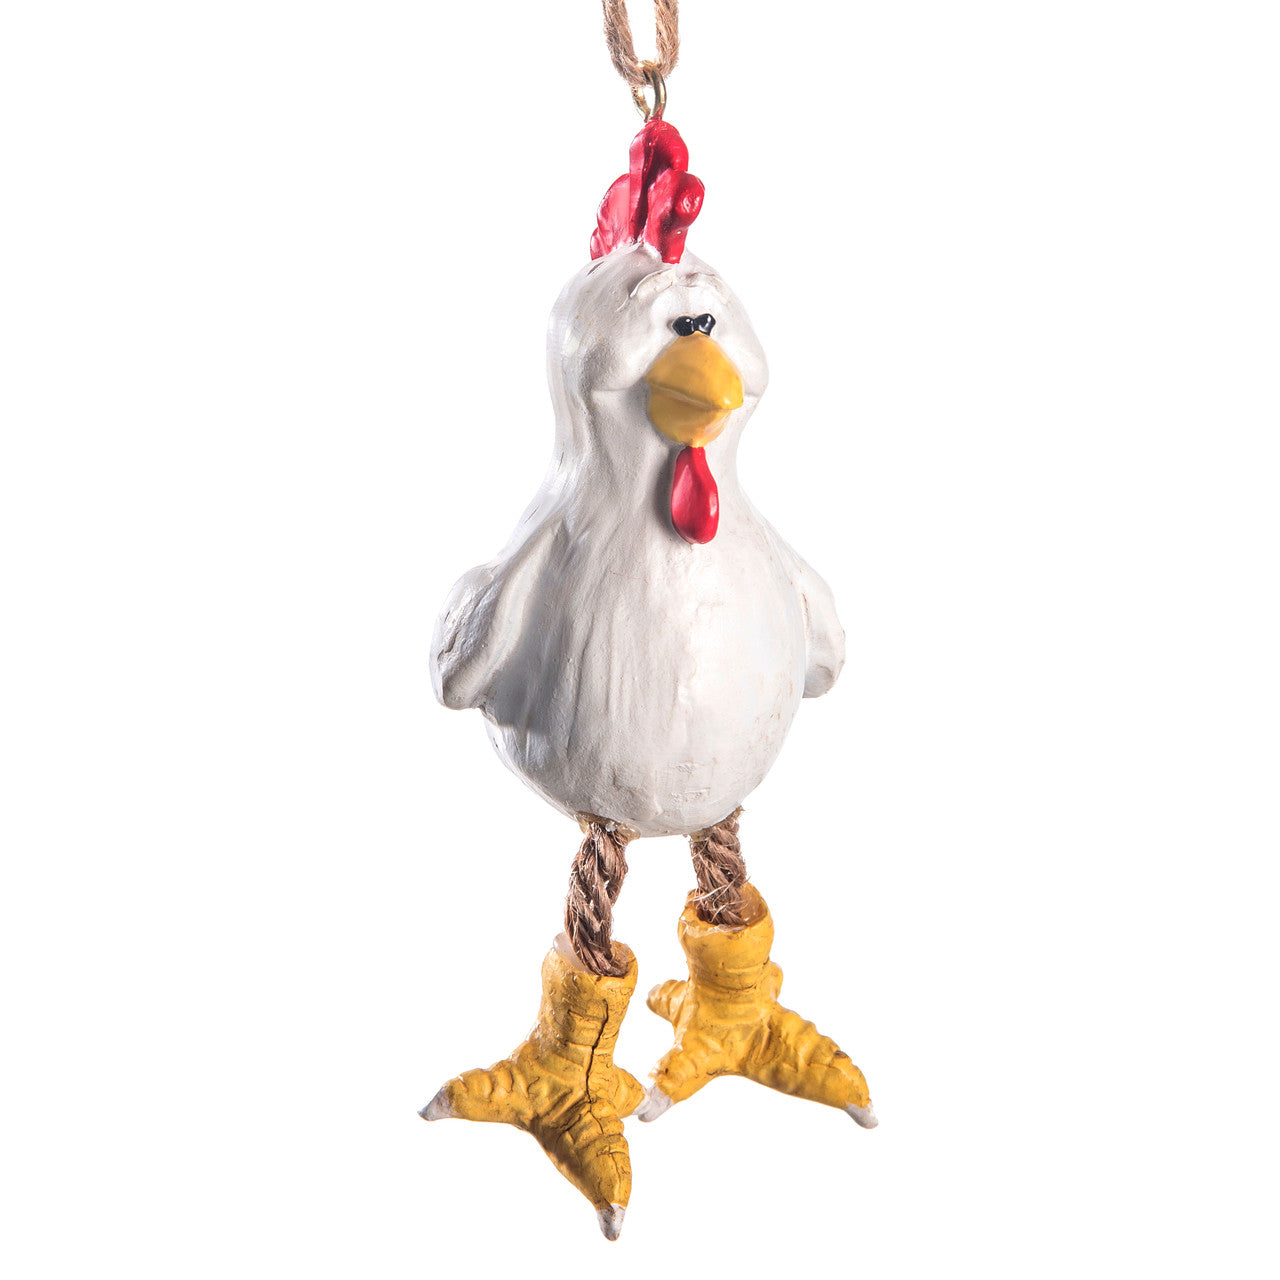 Chicken Ornament Farm Animal Decor by Bert Anderson - Bac 017